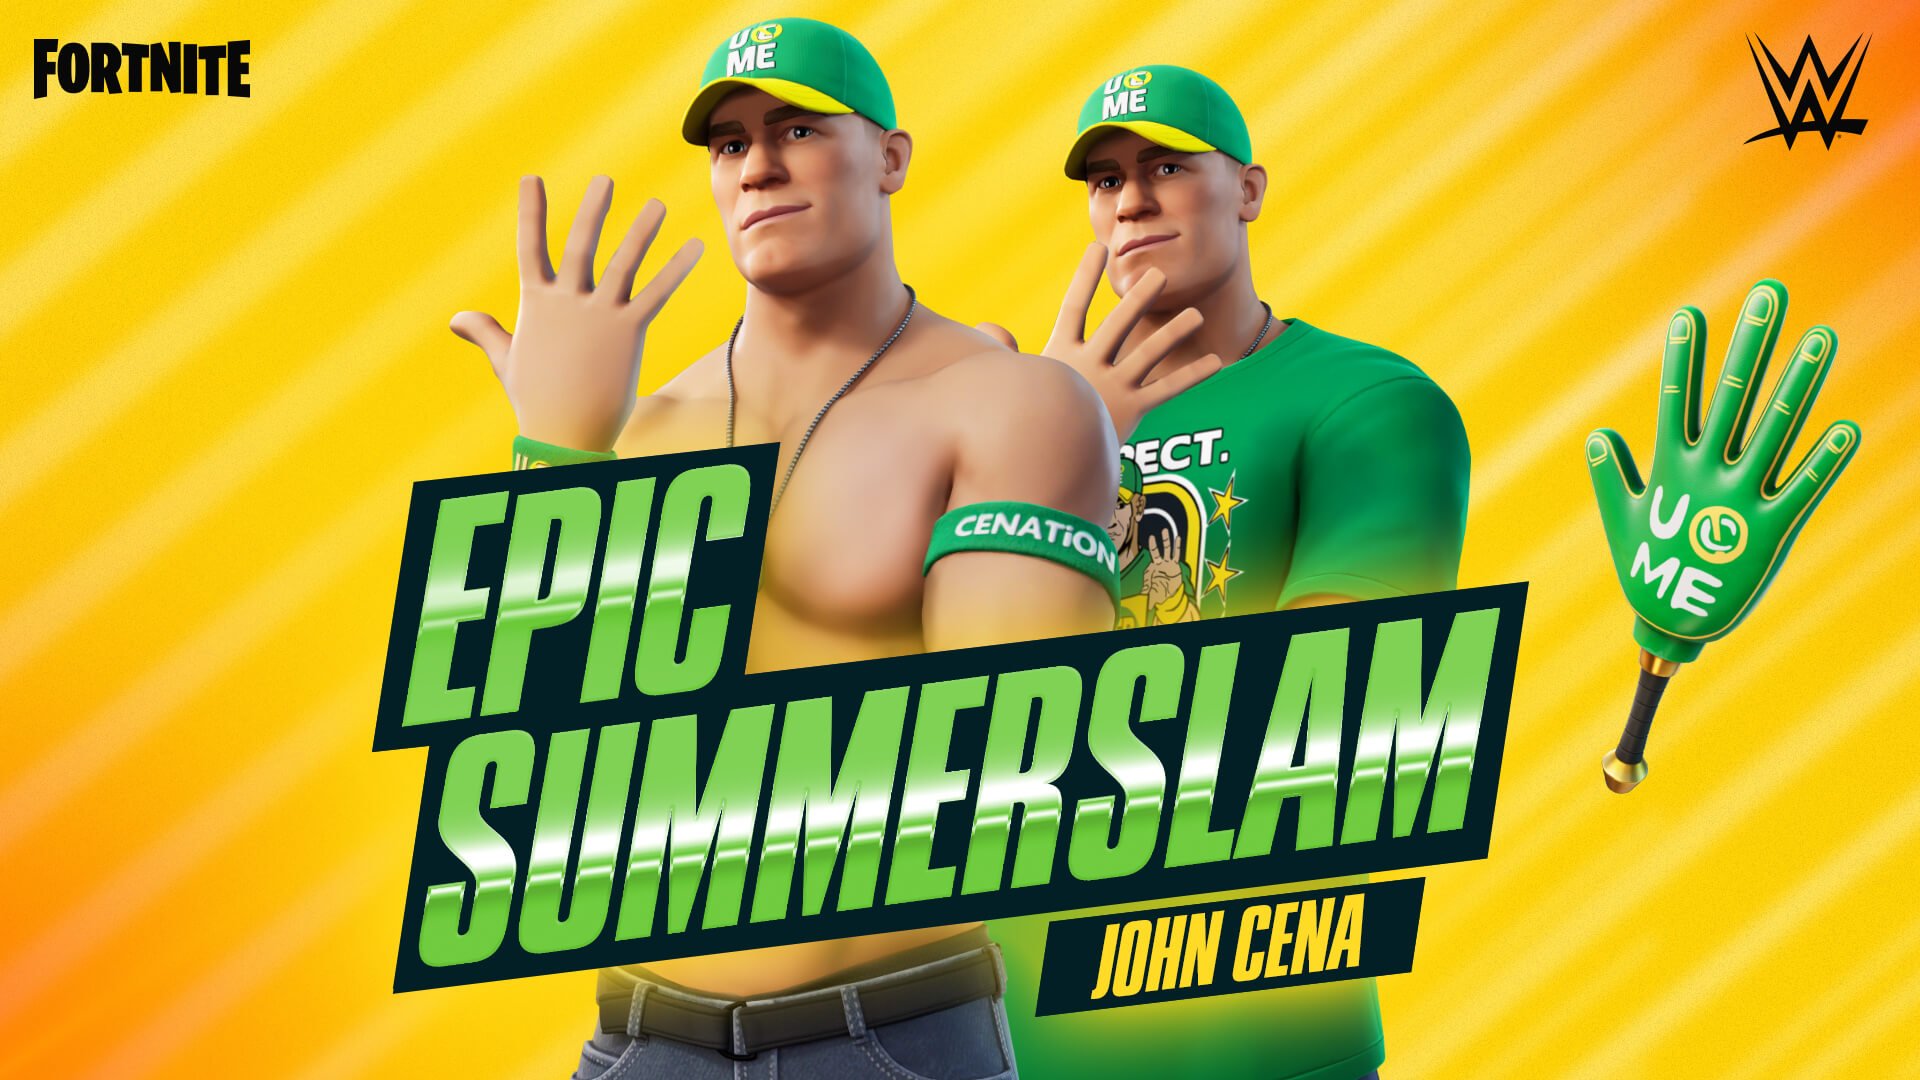 Fortnite WWE John Cena Epic Summerslam Key Art